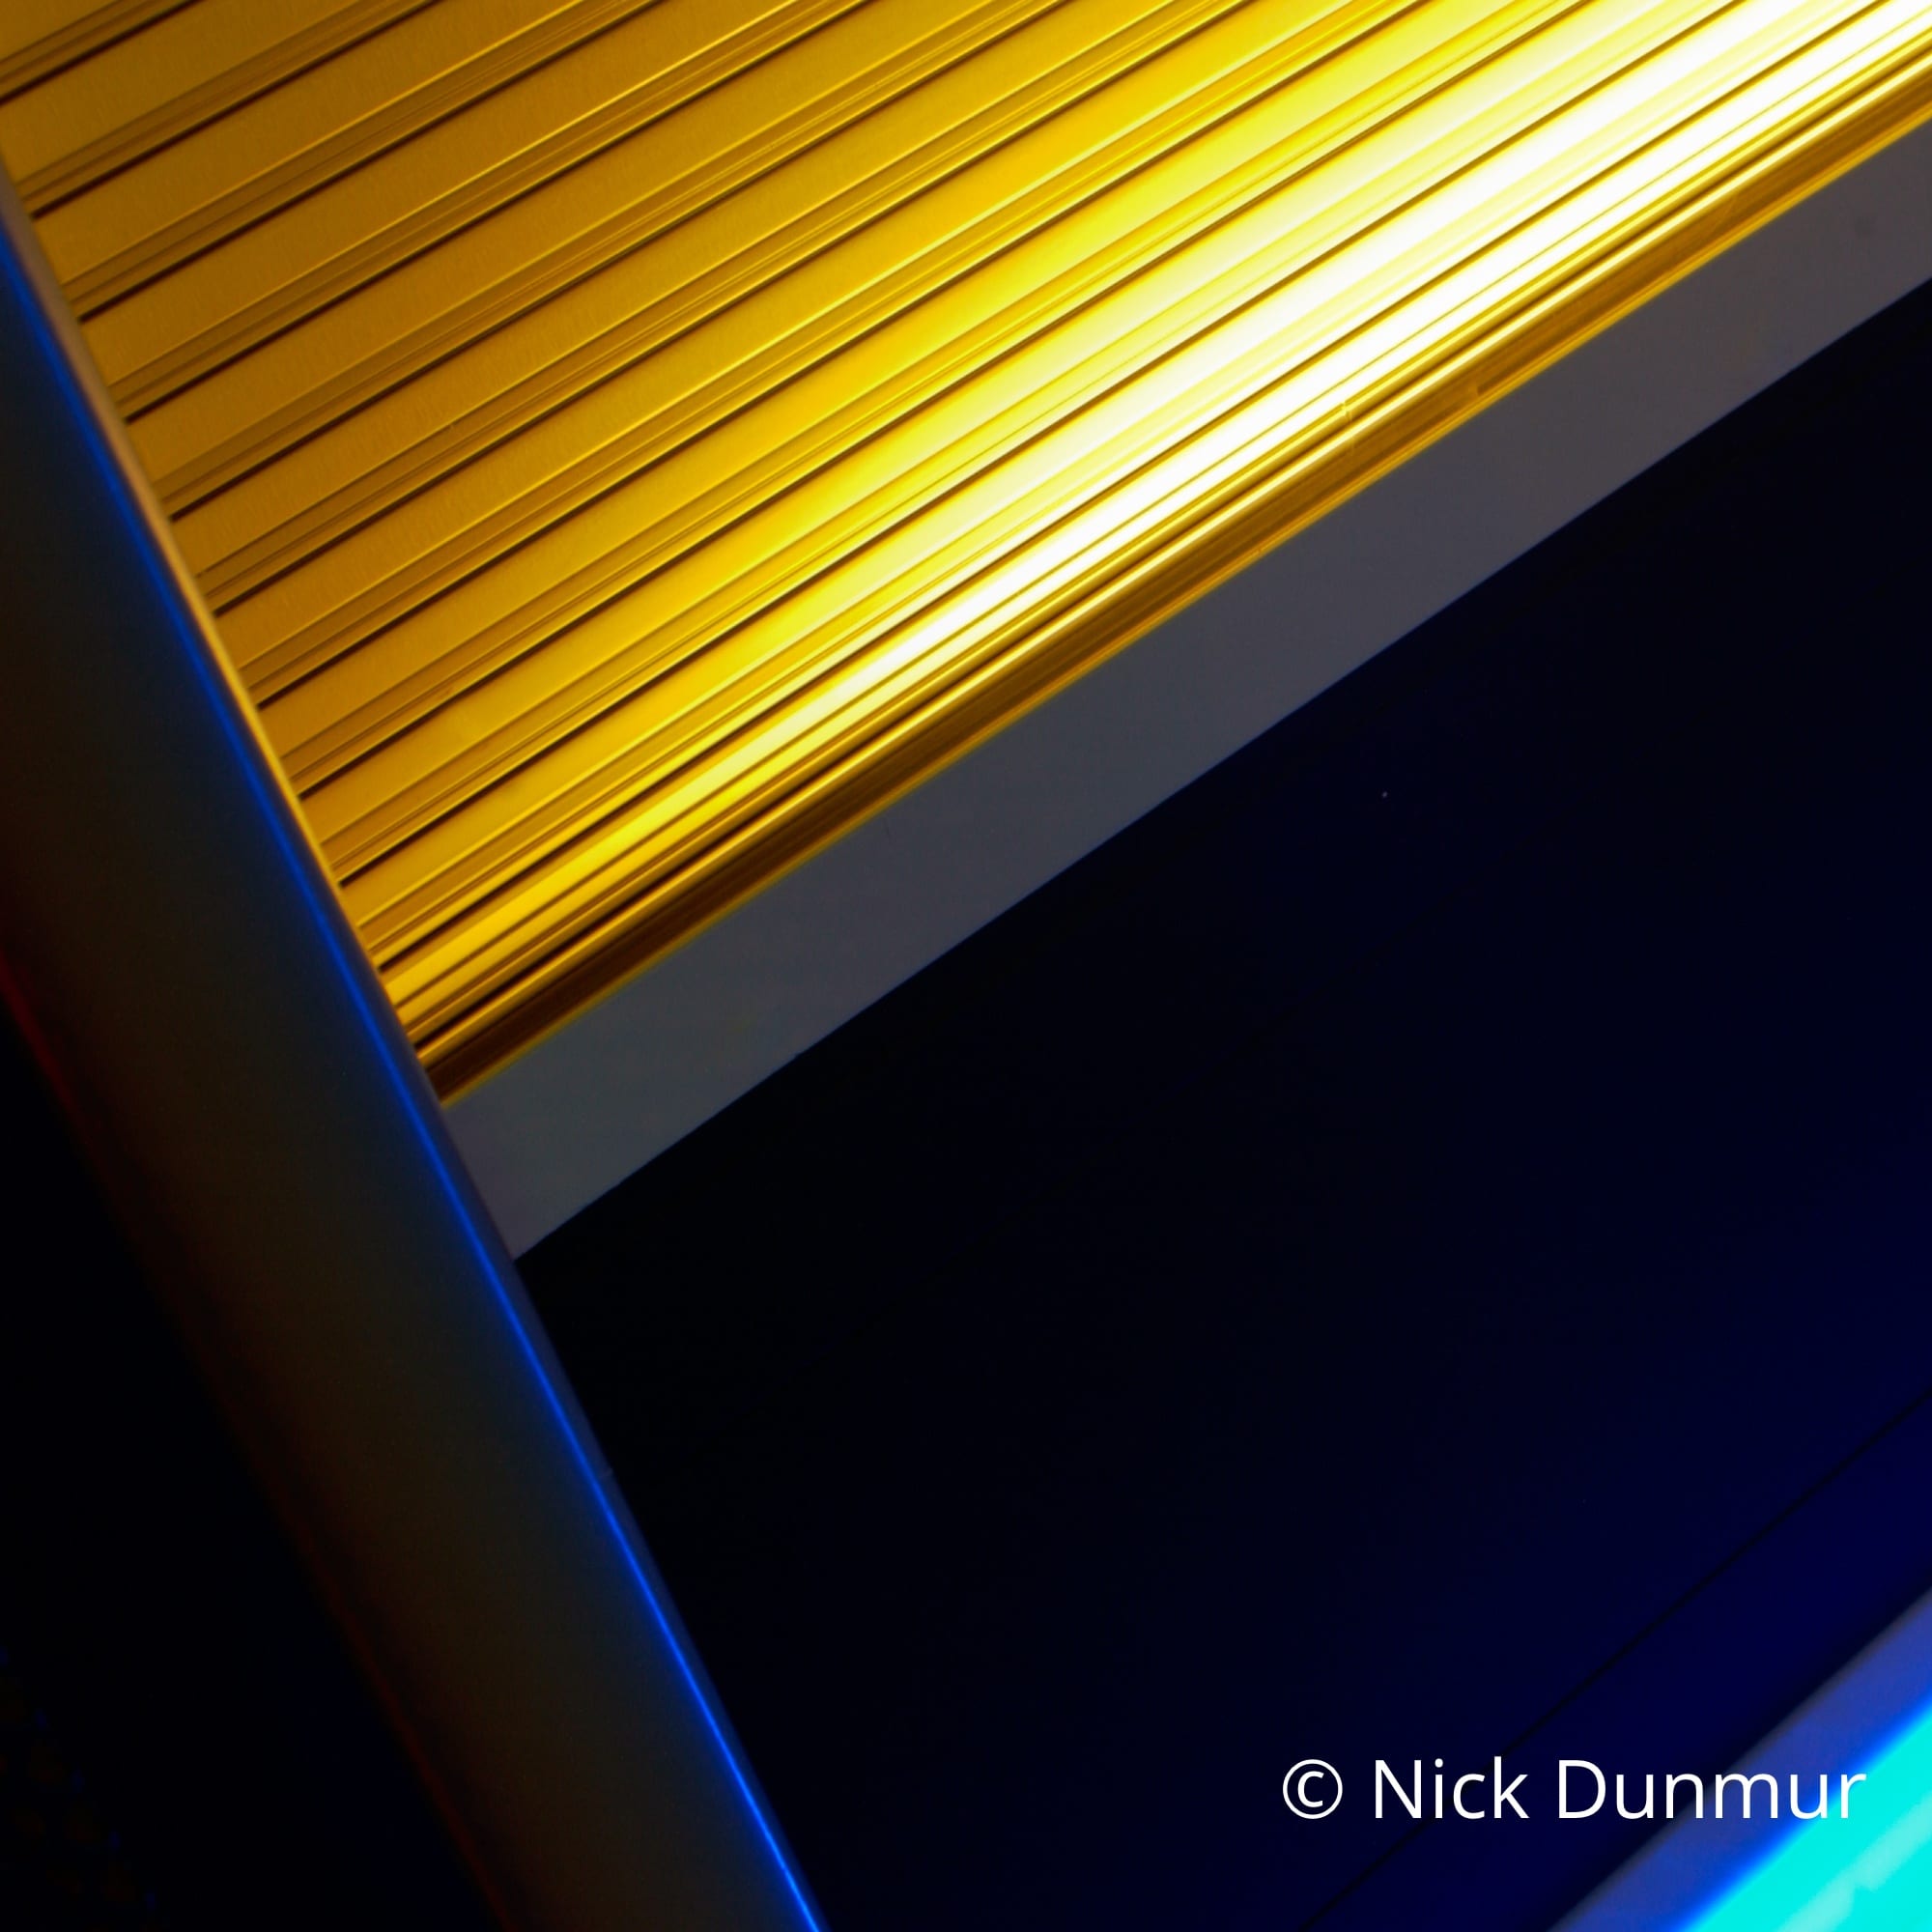 Roof Lights - Nick Dunmur